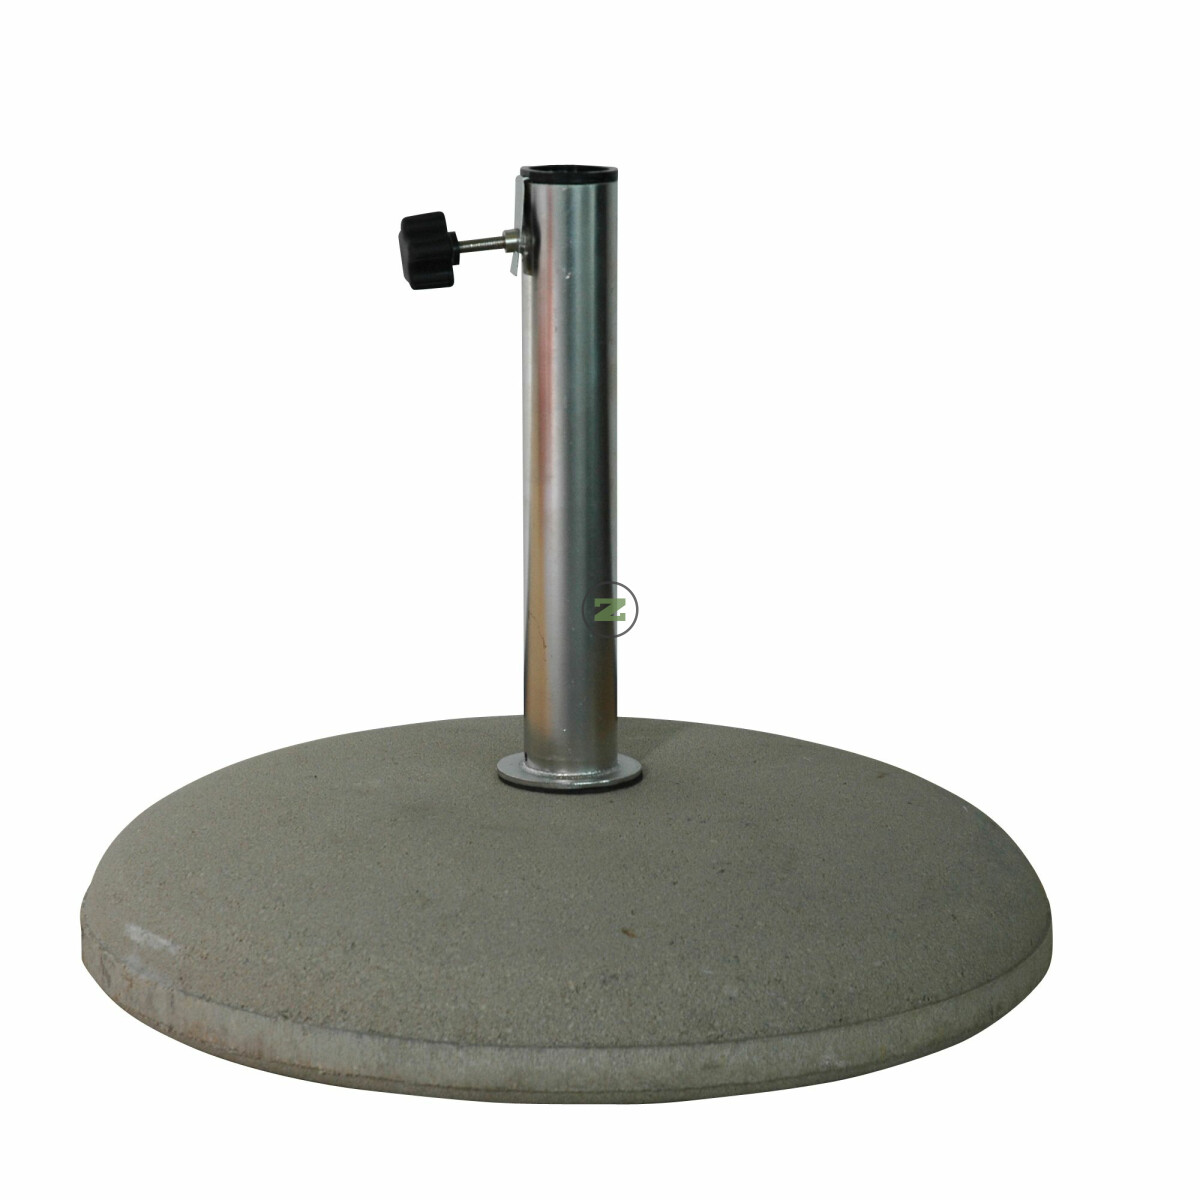 Concrete base 30 kg round lightgrey for poles 25-44 mm...